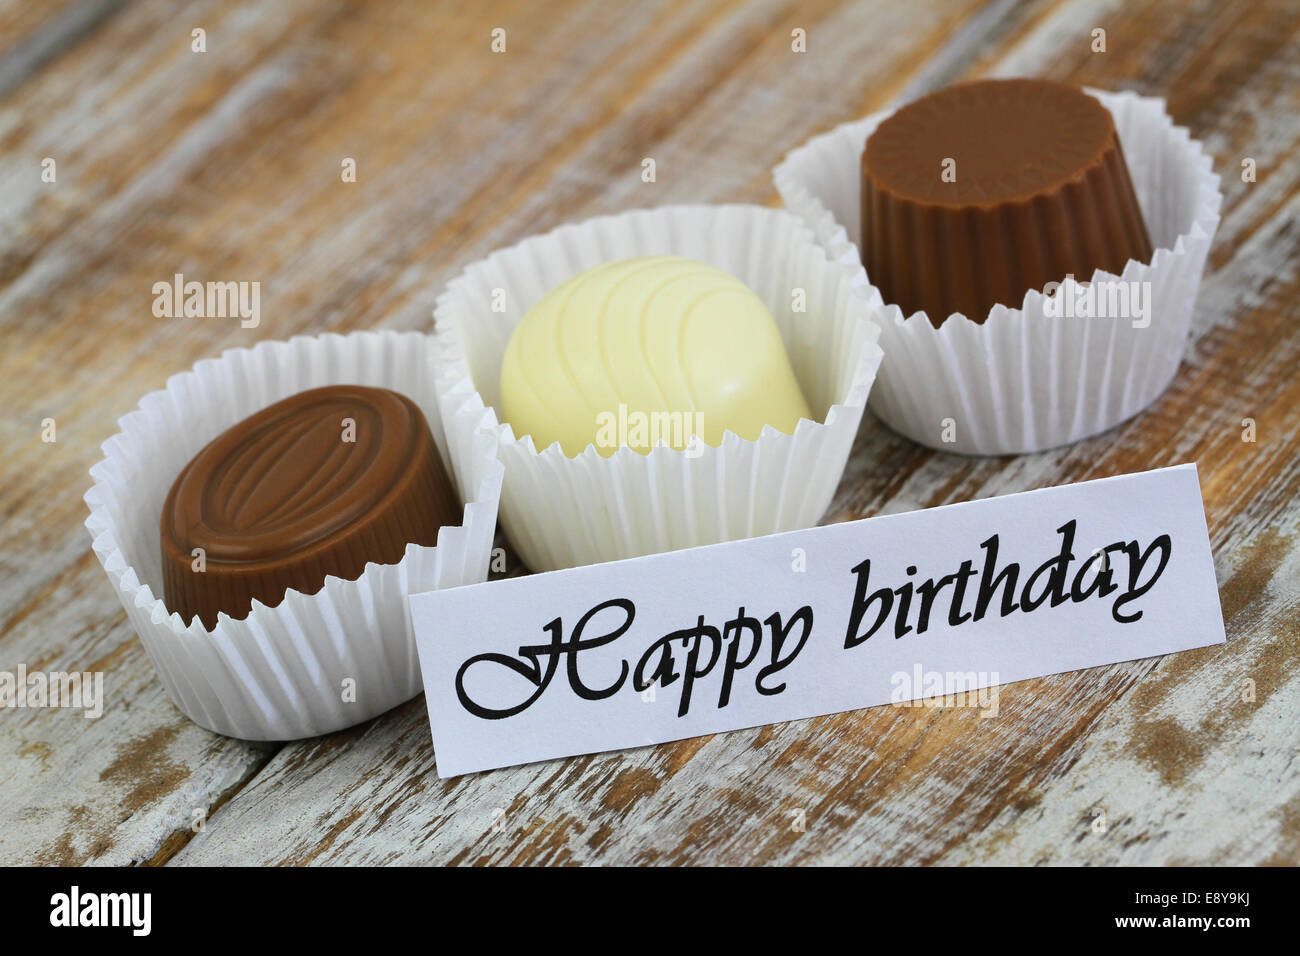 Happy birthday card with assorted chocolates Stock Photo